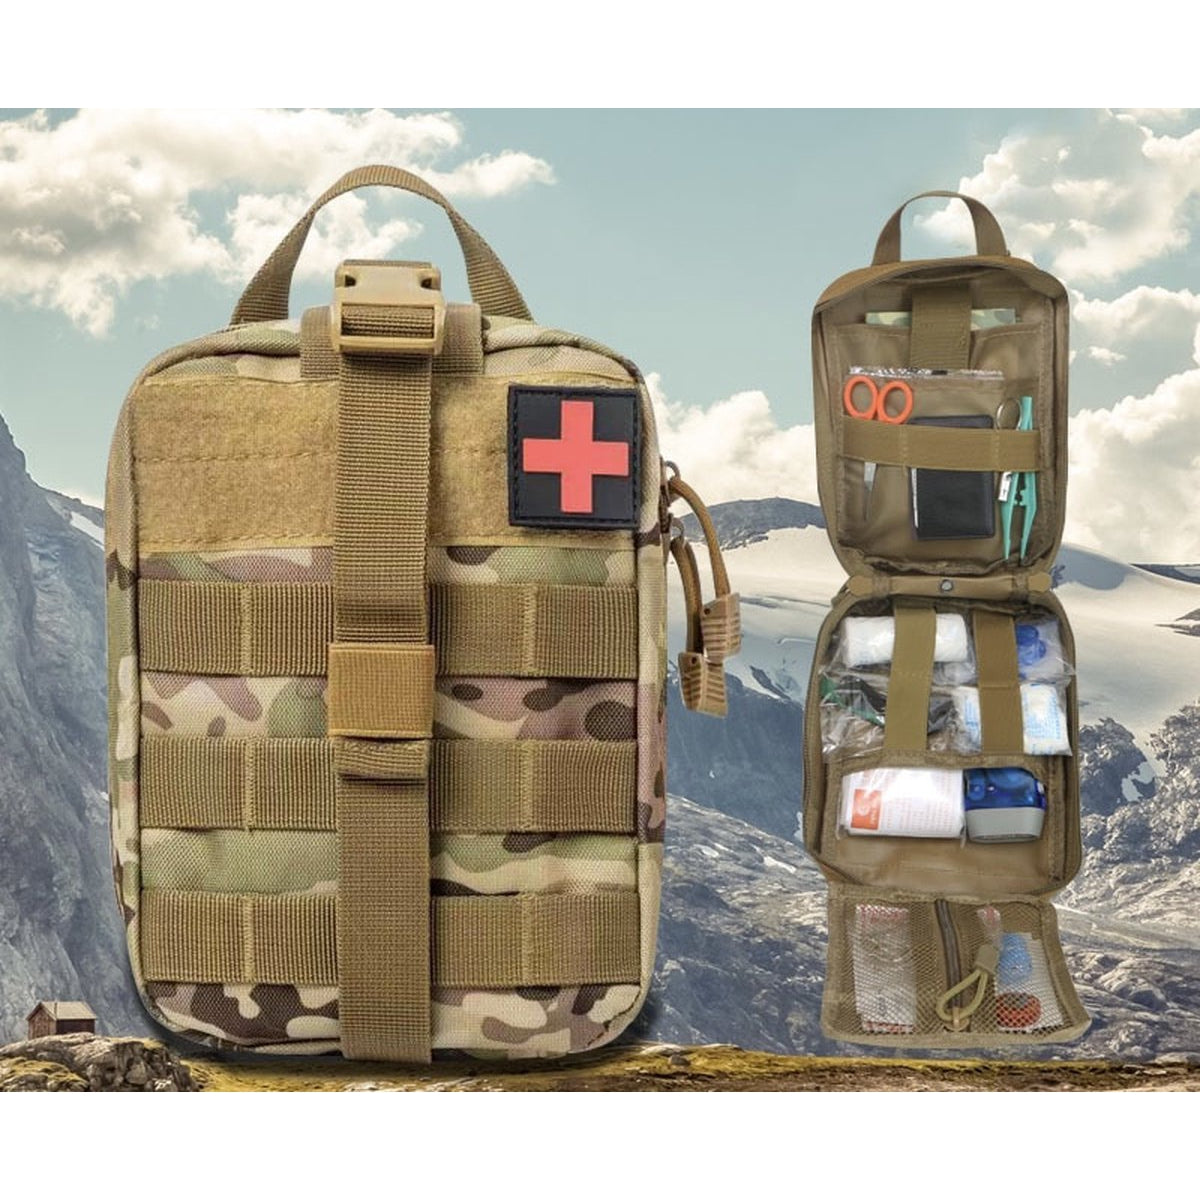 Militaire EHBO kit - Chinees leger - Medisch - Professioneel - First aid - Kamperen - Survival - Reizen - Camping - Eerste hulp